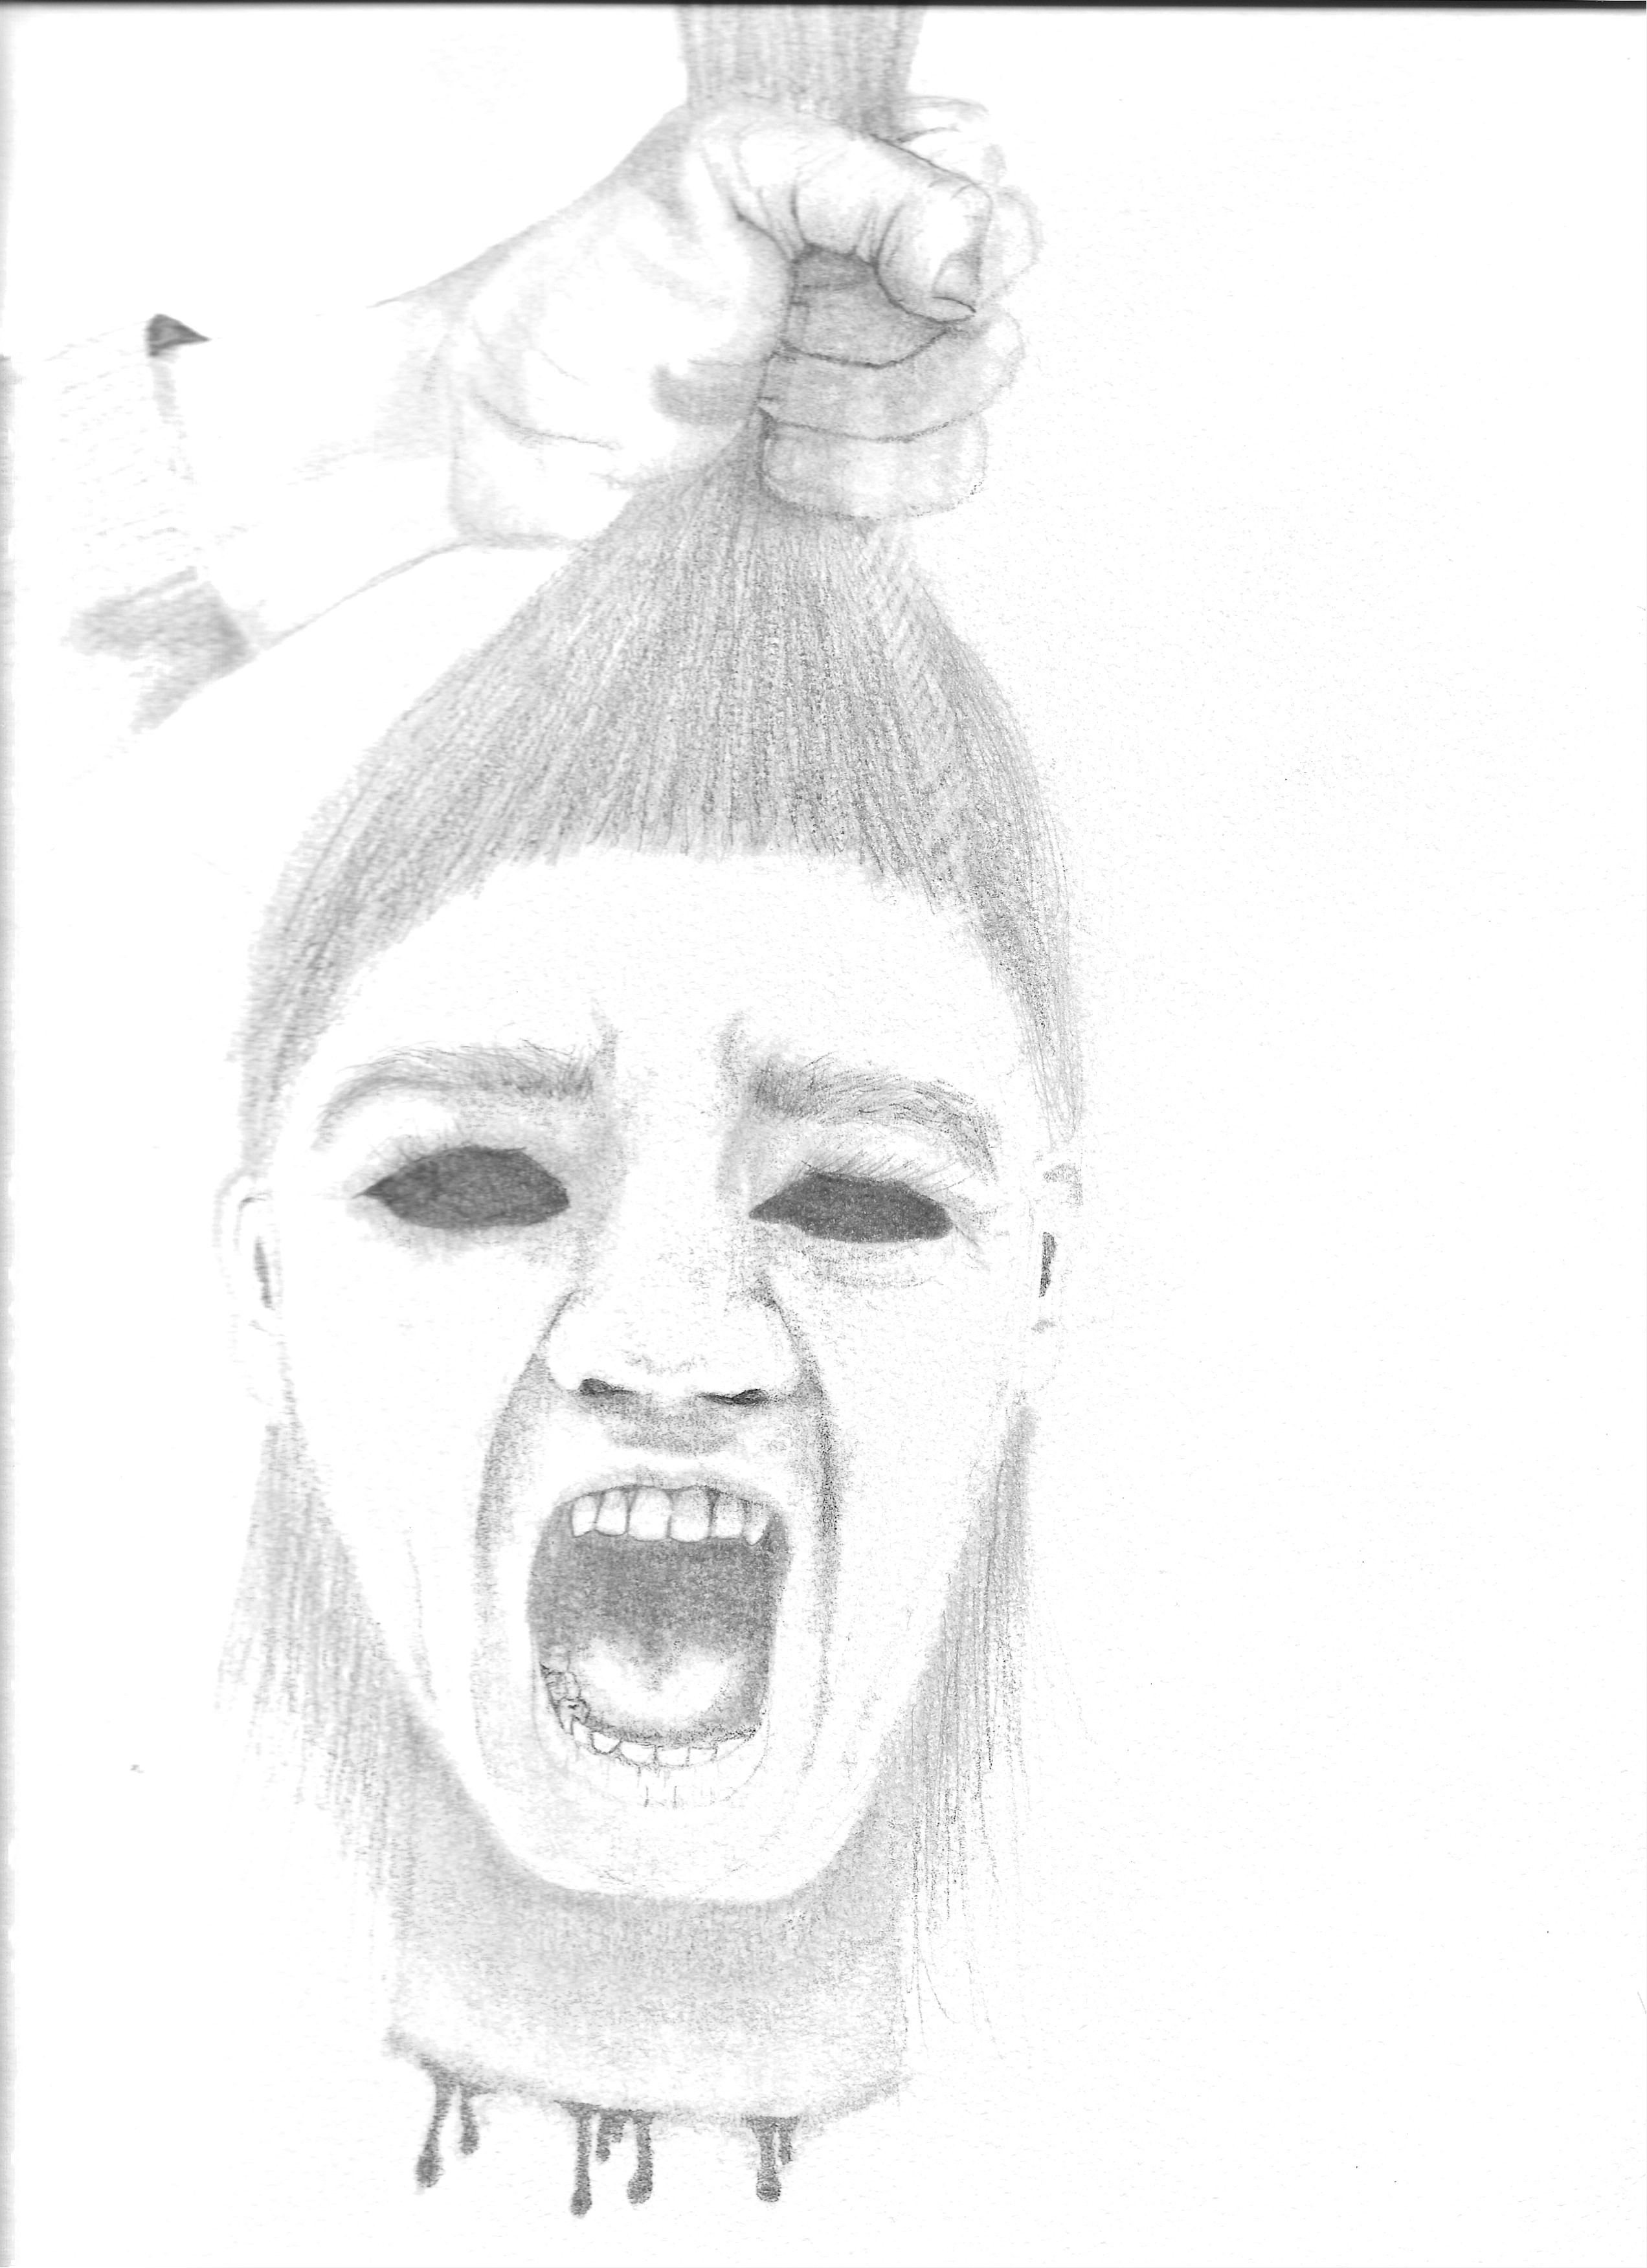 Wayne Tully Horror Art: Drawing An Exploding Skull Illustration In Black  And White Ink